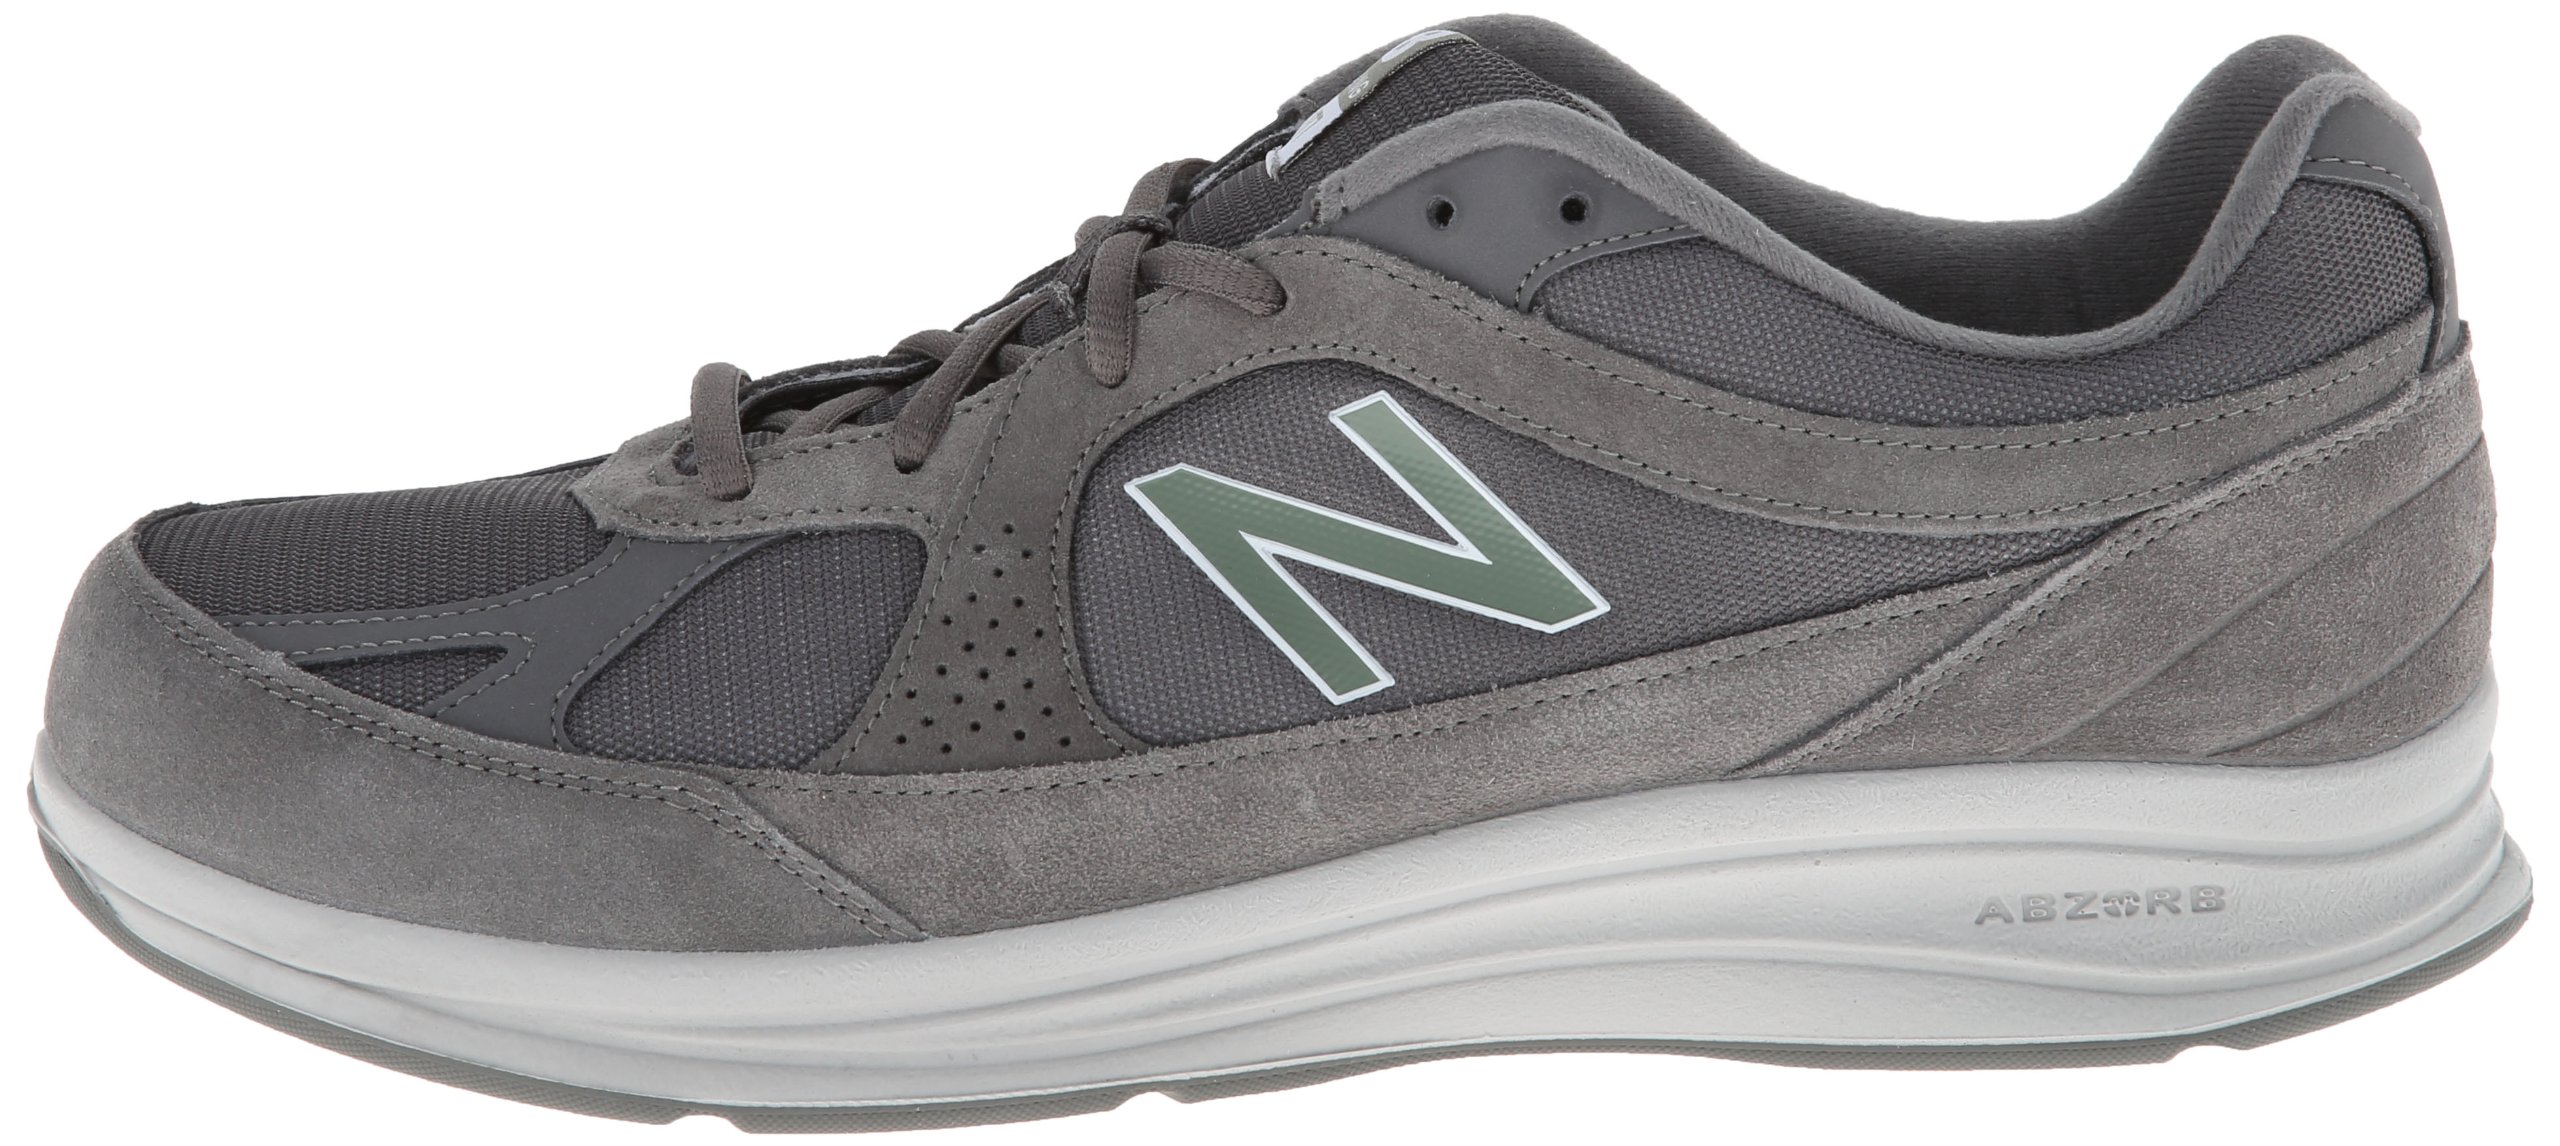 New Balance Men's 877 V1 Walking Shoe